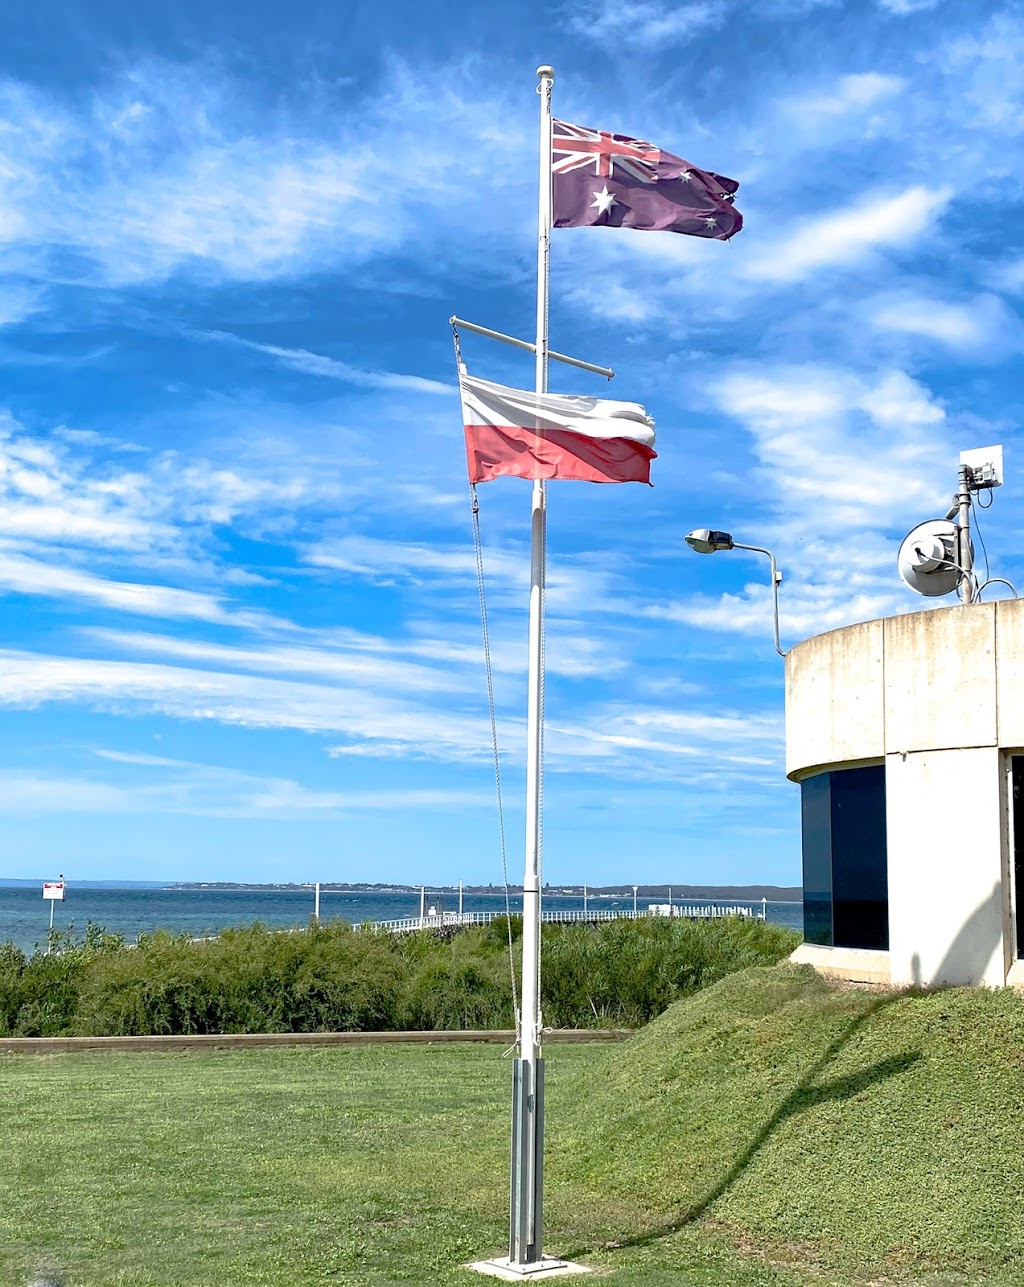 Port Phillip Sea Pilots - Pilot Station |  | 5 Tobin Dr, Queenscliff VIC 3225, Australia | 0352545500 OR +61 3 5254 5500